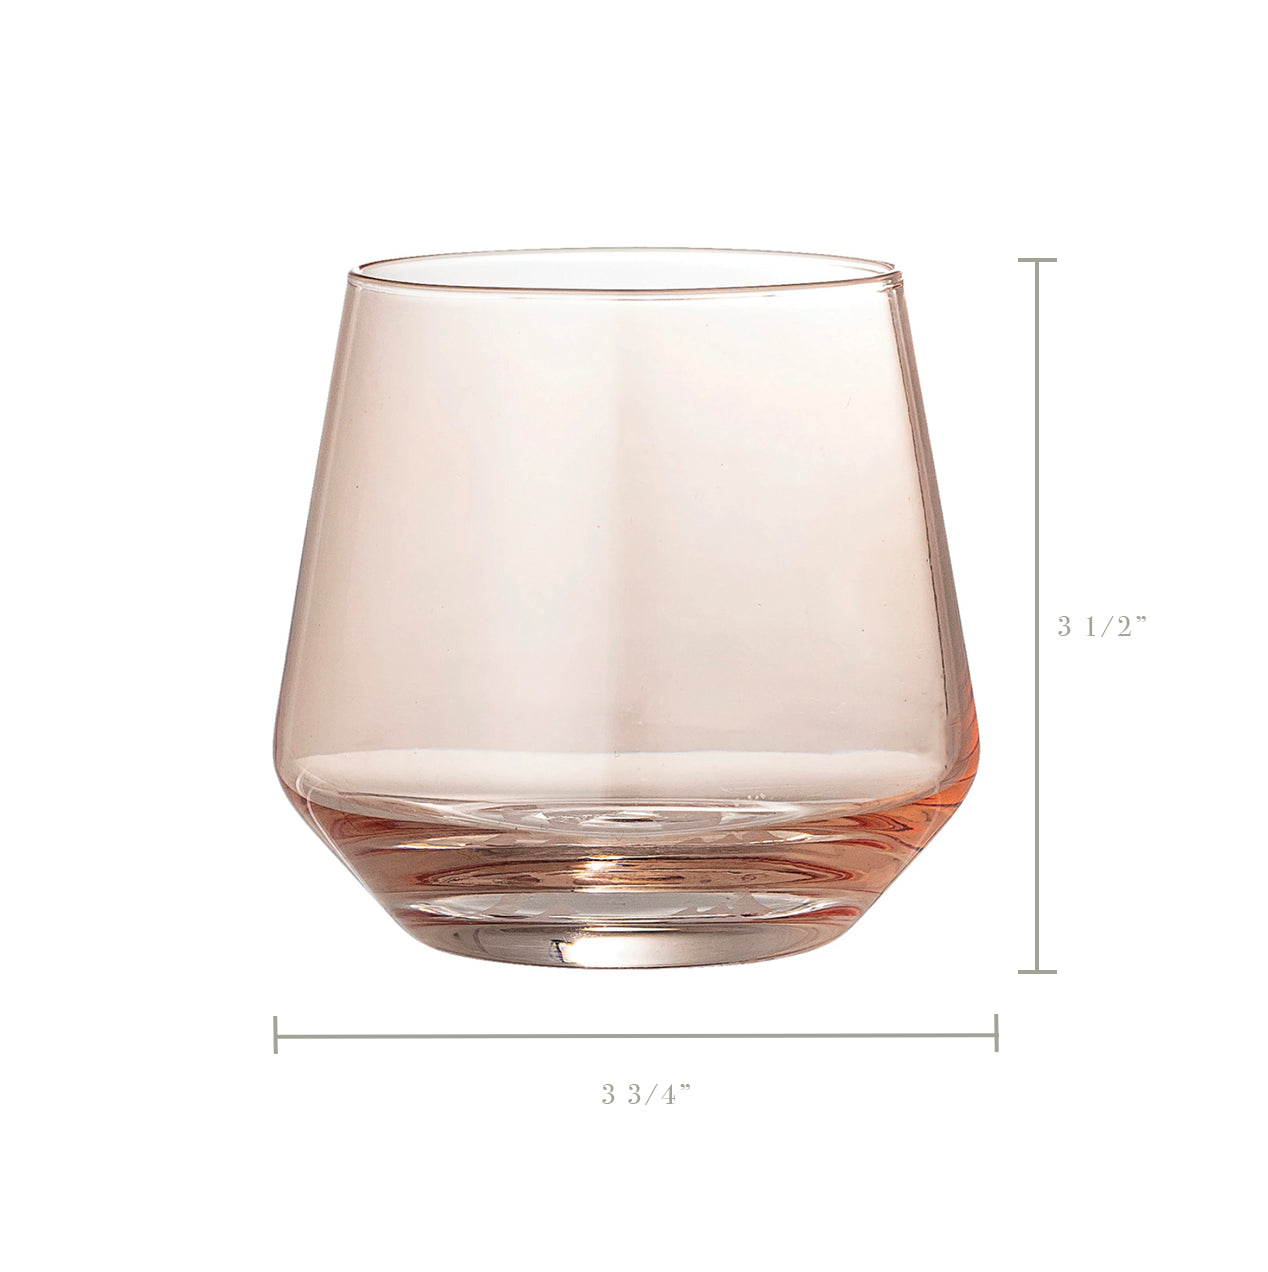 Blush Stemless Wine Glass, Set of 2